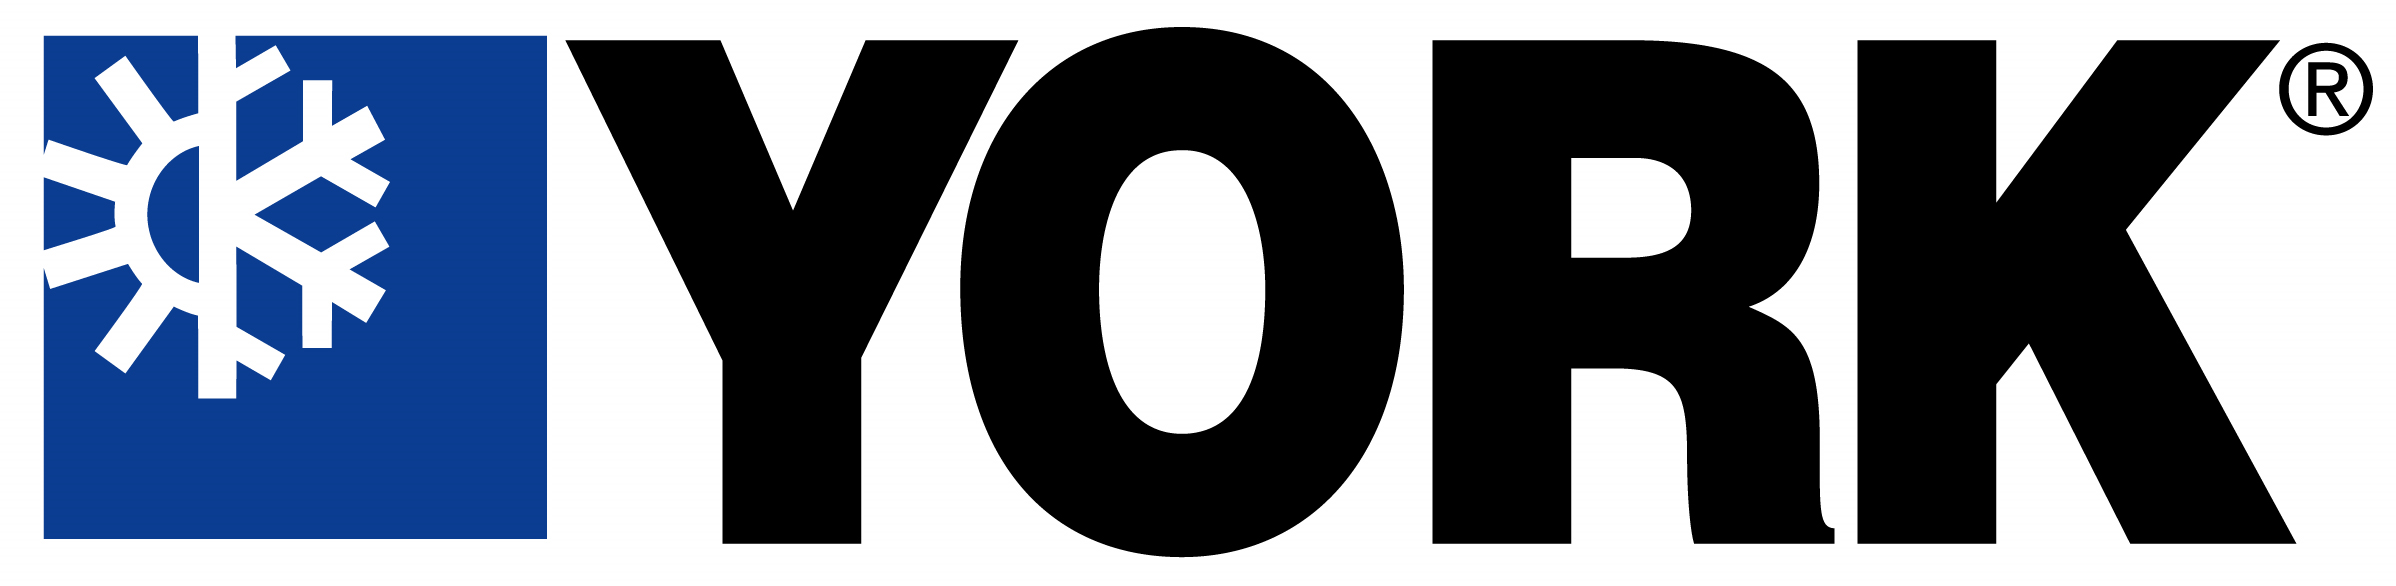 York Group Logo photo - 1